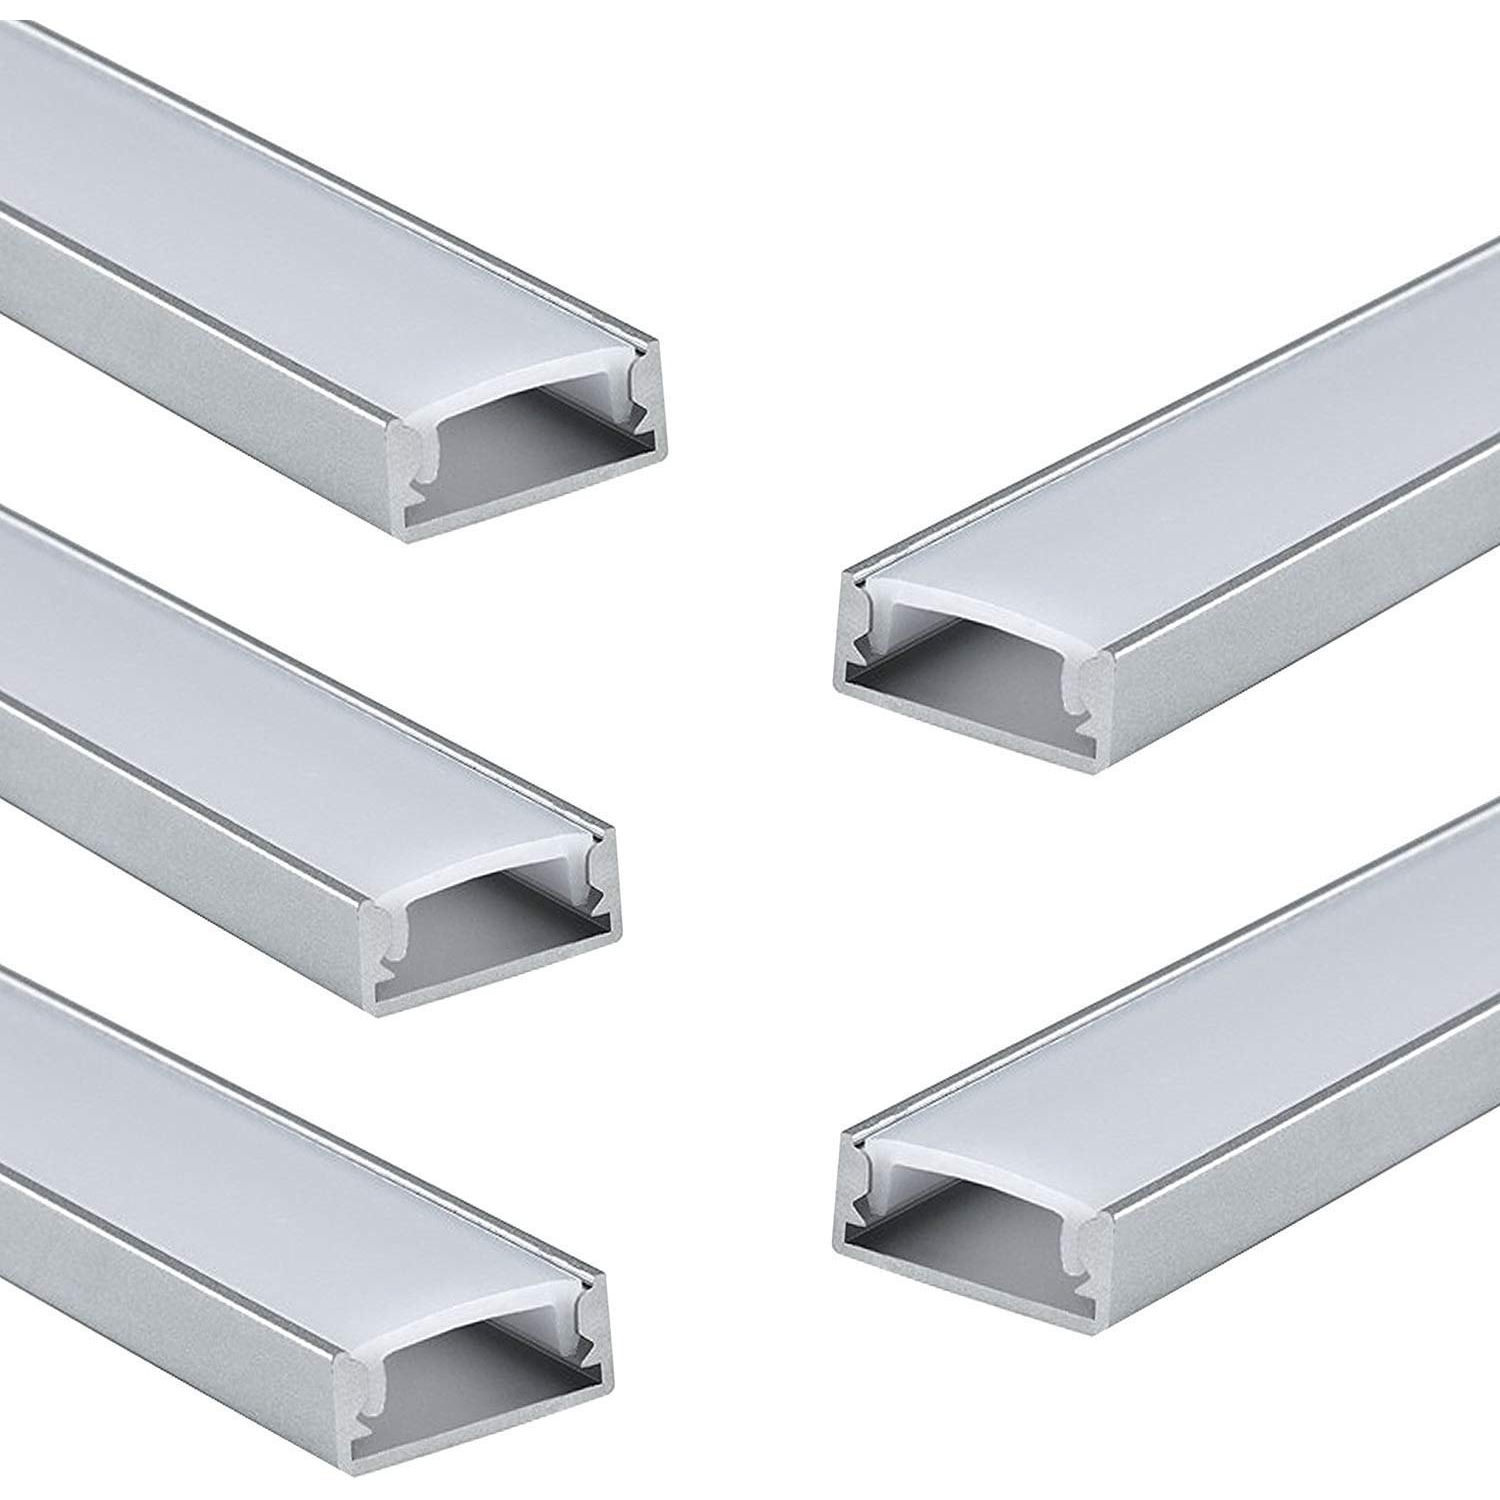 Extrusion aluminium profile for LED light (9)wsg